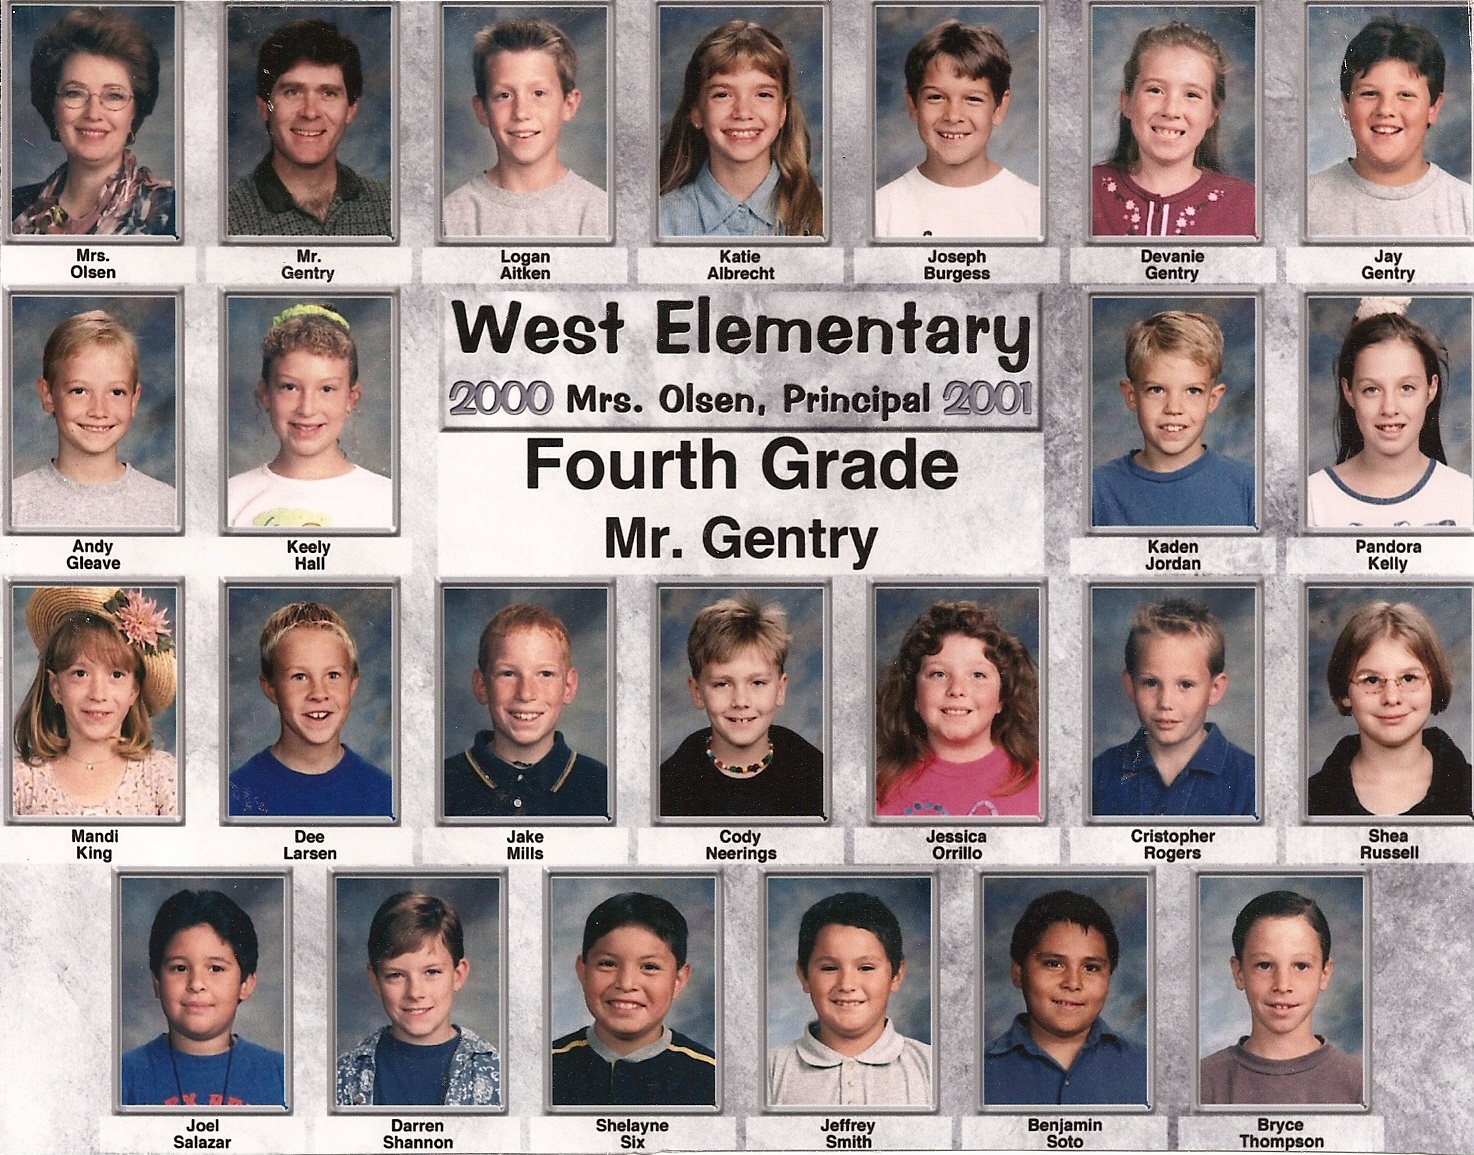 Mr. Robert Gentry's 2000-2001 fourth grade class at West Elementary School